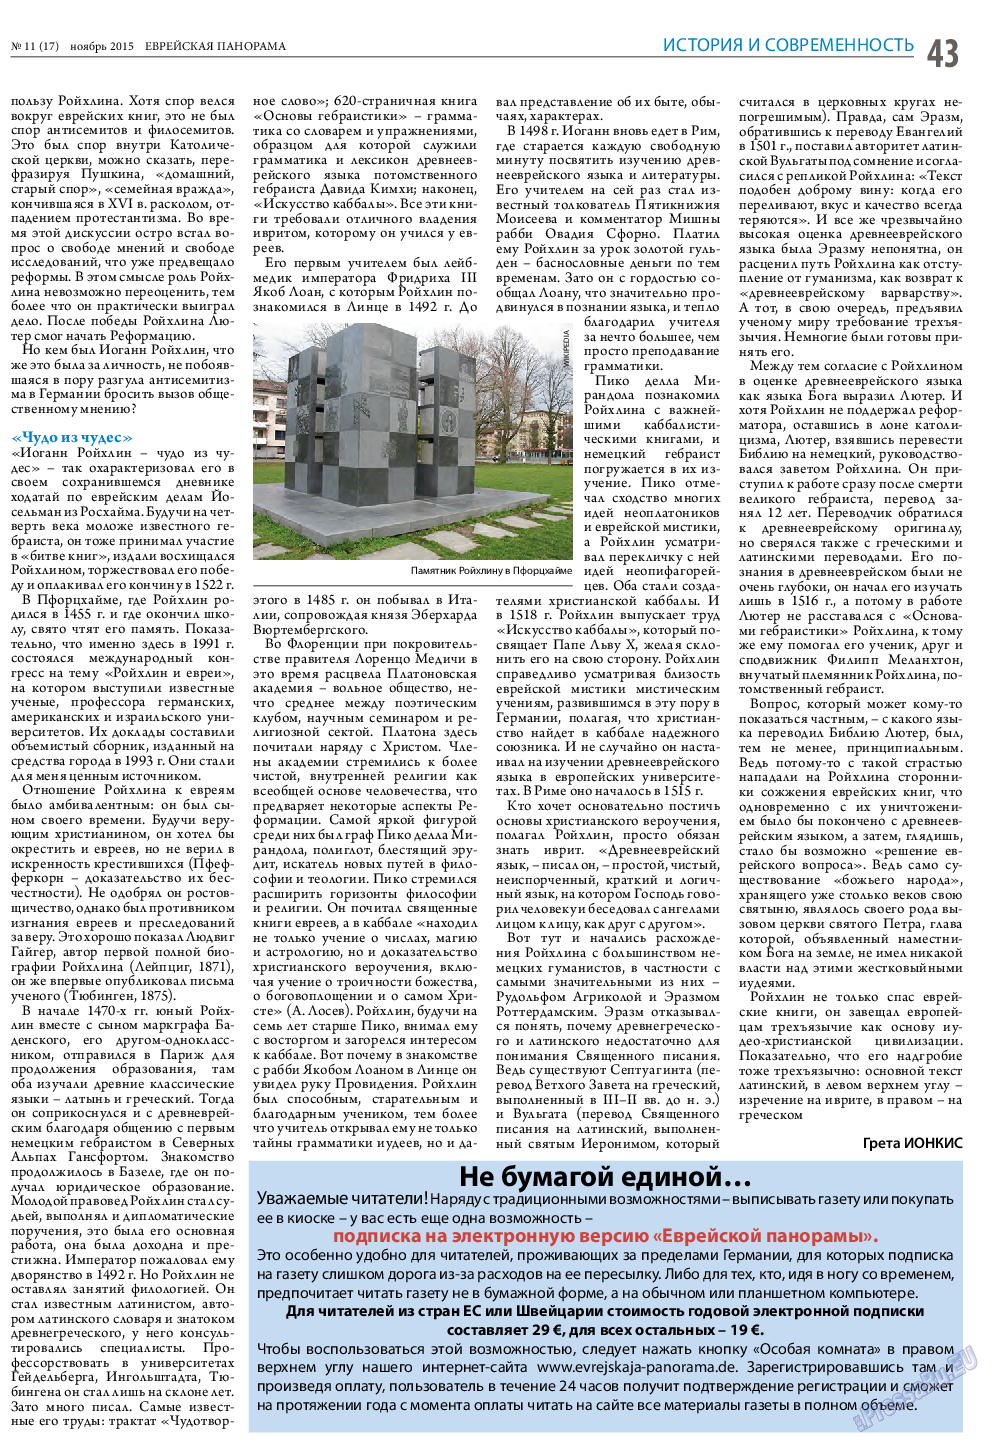 Еврейская панорама, газета. 2015 №11 стр.43